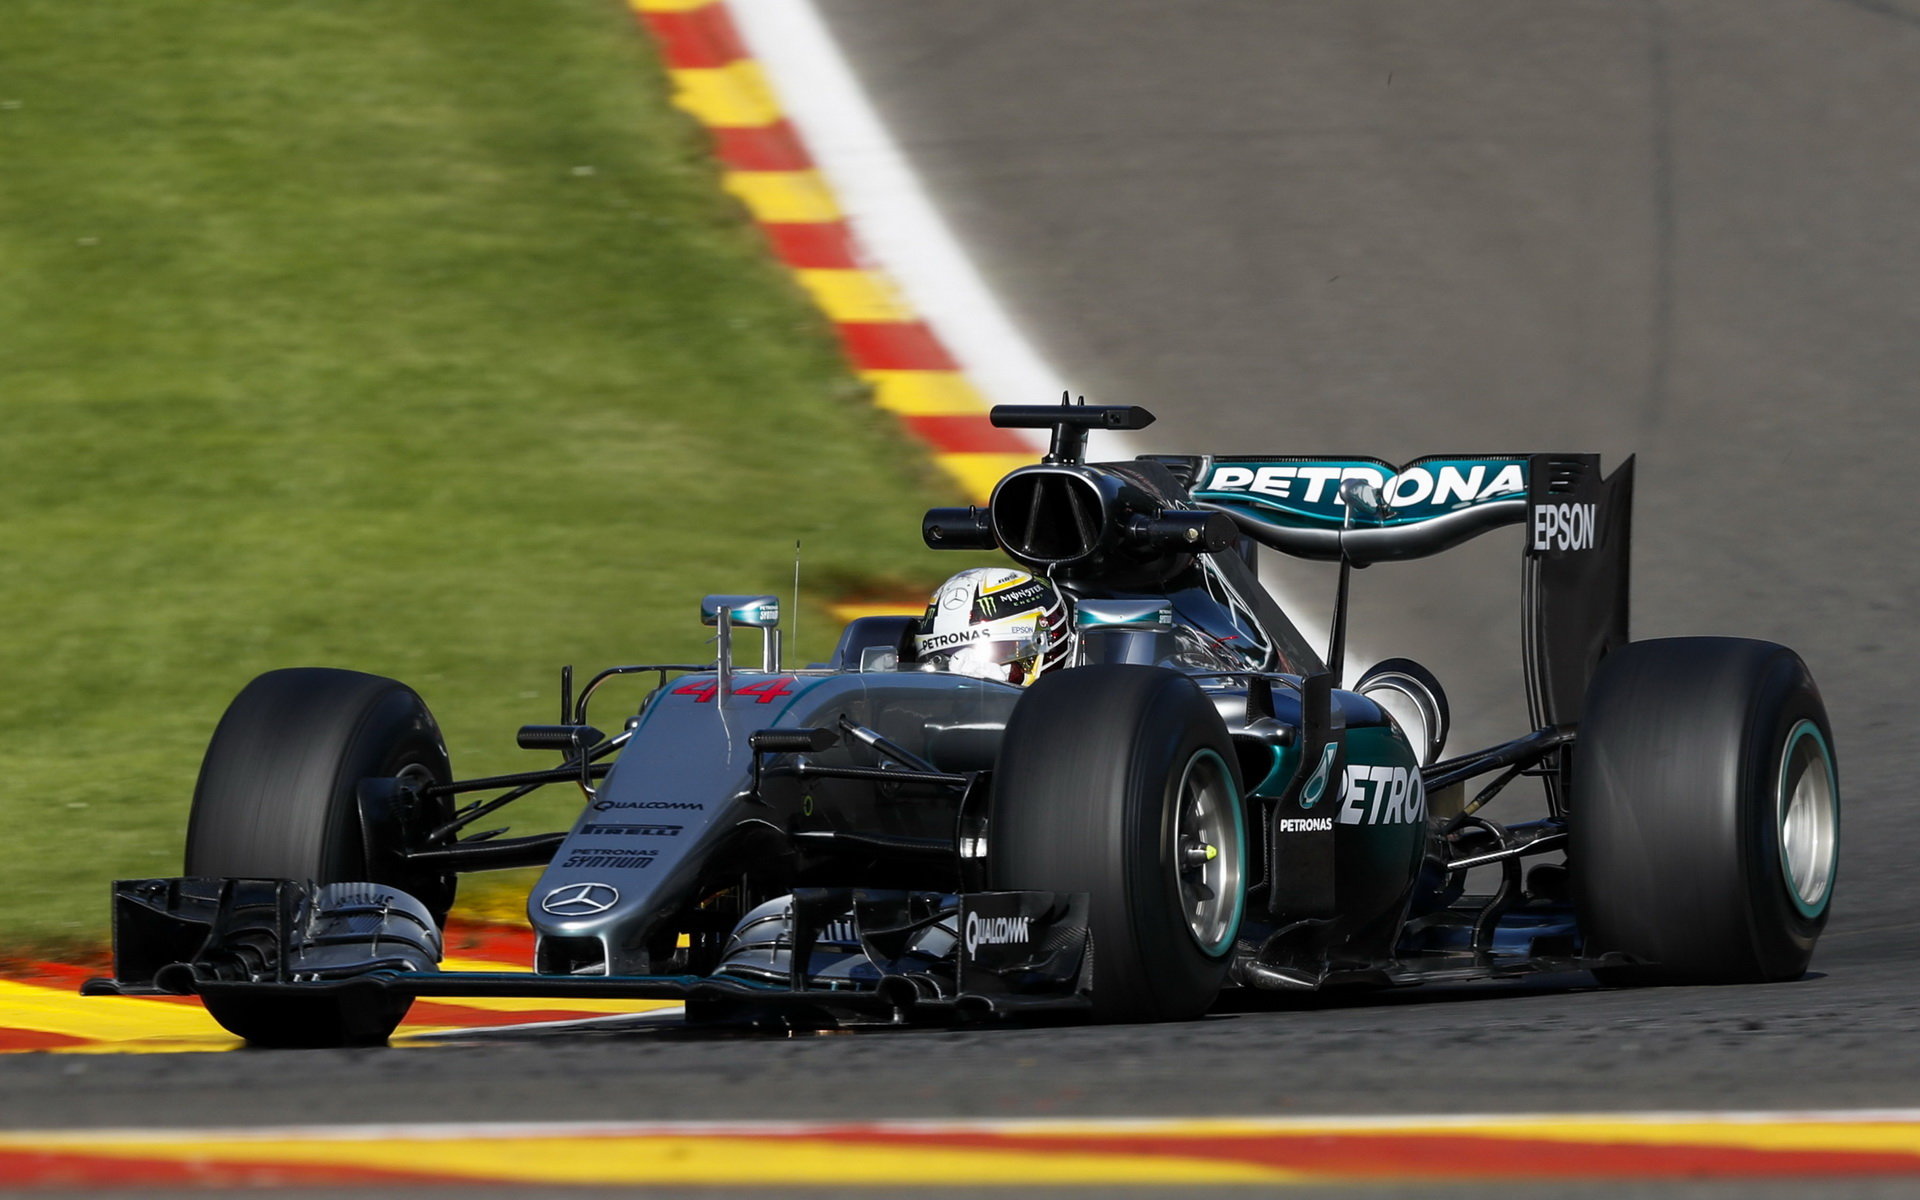 Lewis Hamilton odpoledne Nica Rosberga překonal